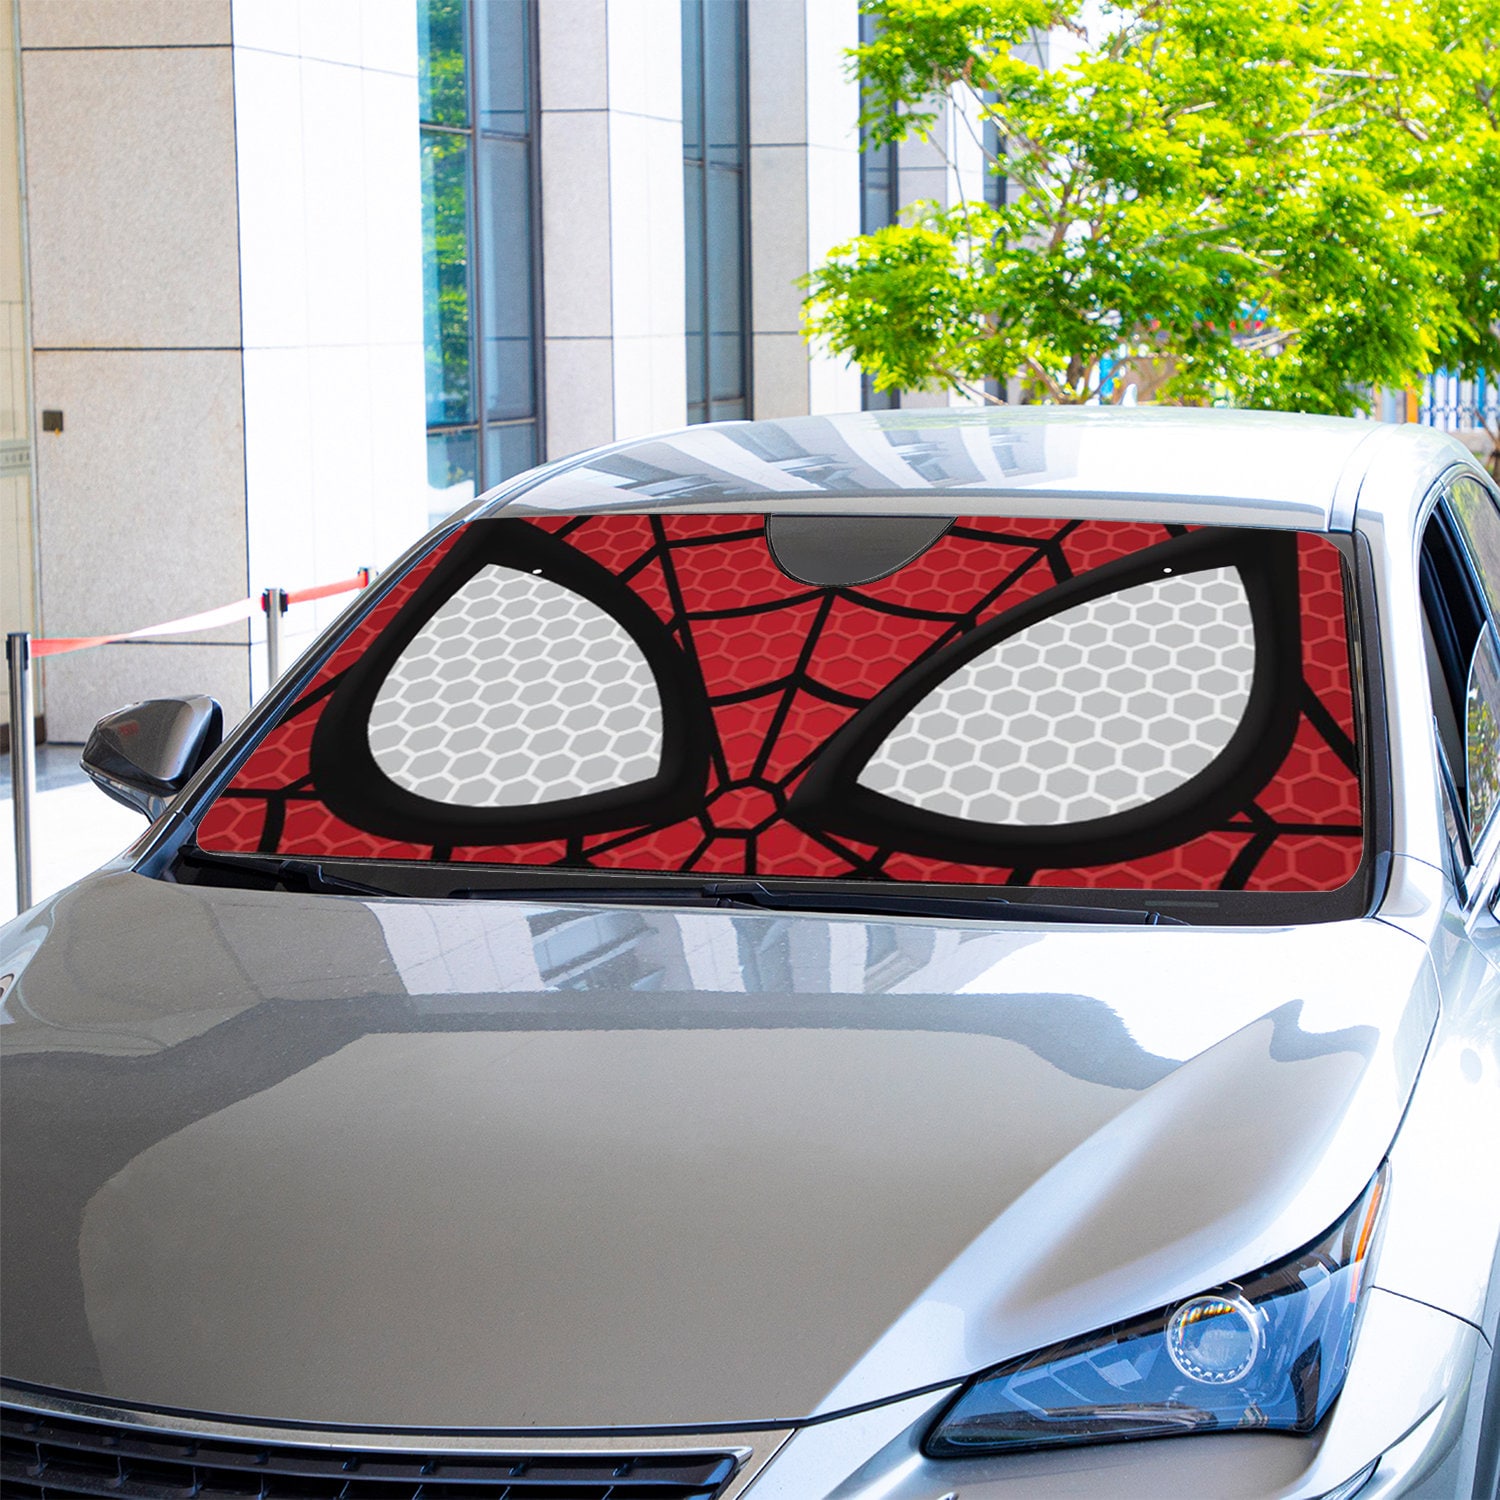 Spider-Man Car Sunshade | Spider-Man Car Windshield Panels